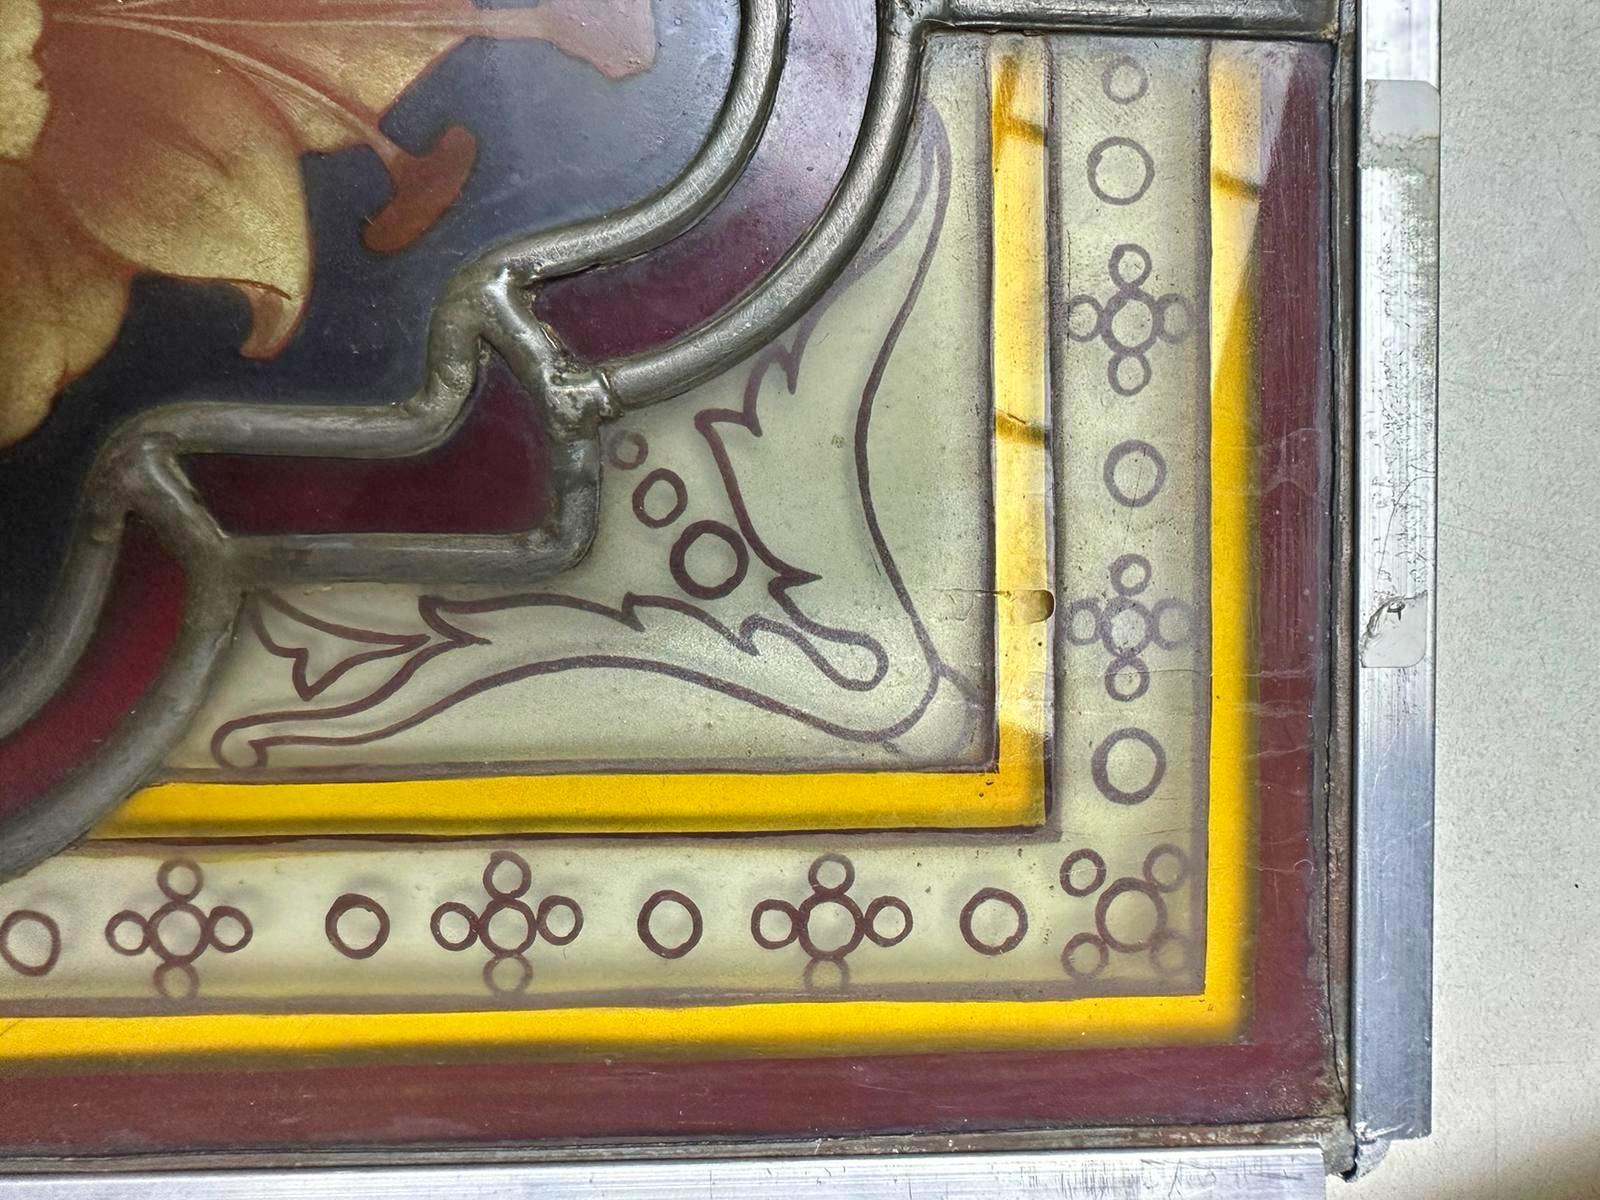 Pair of Italian Art Deco Panels late 19th Century 